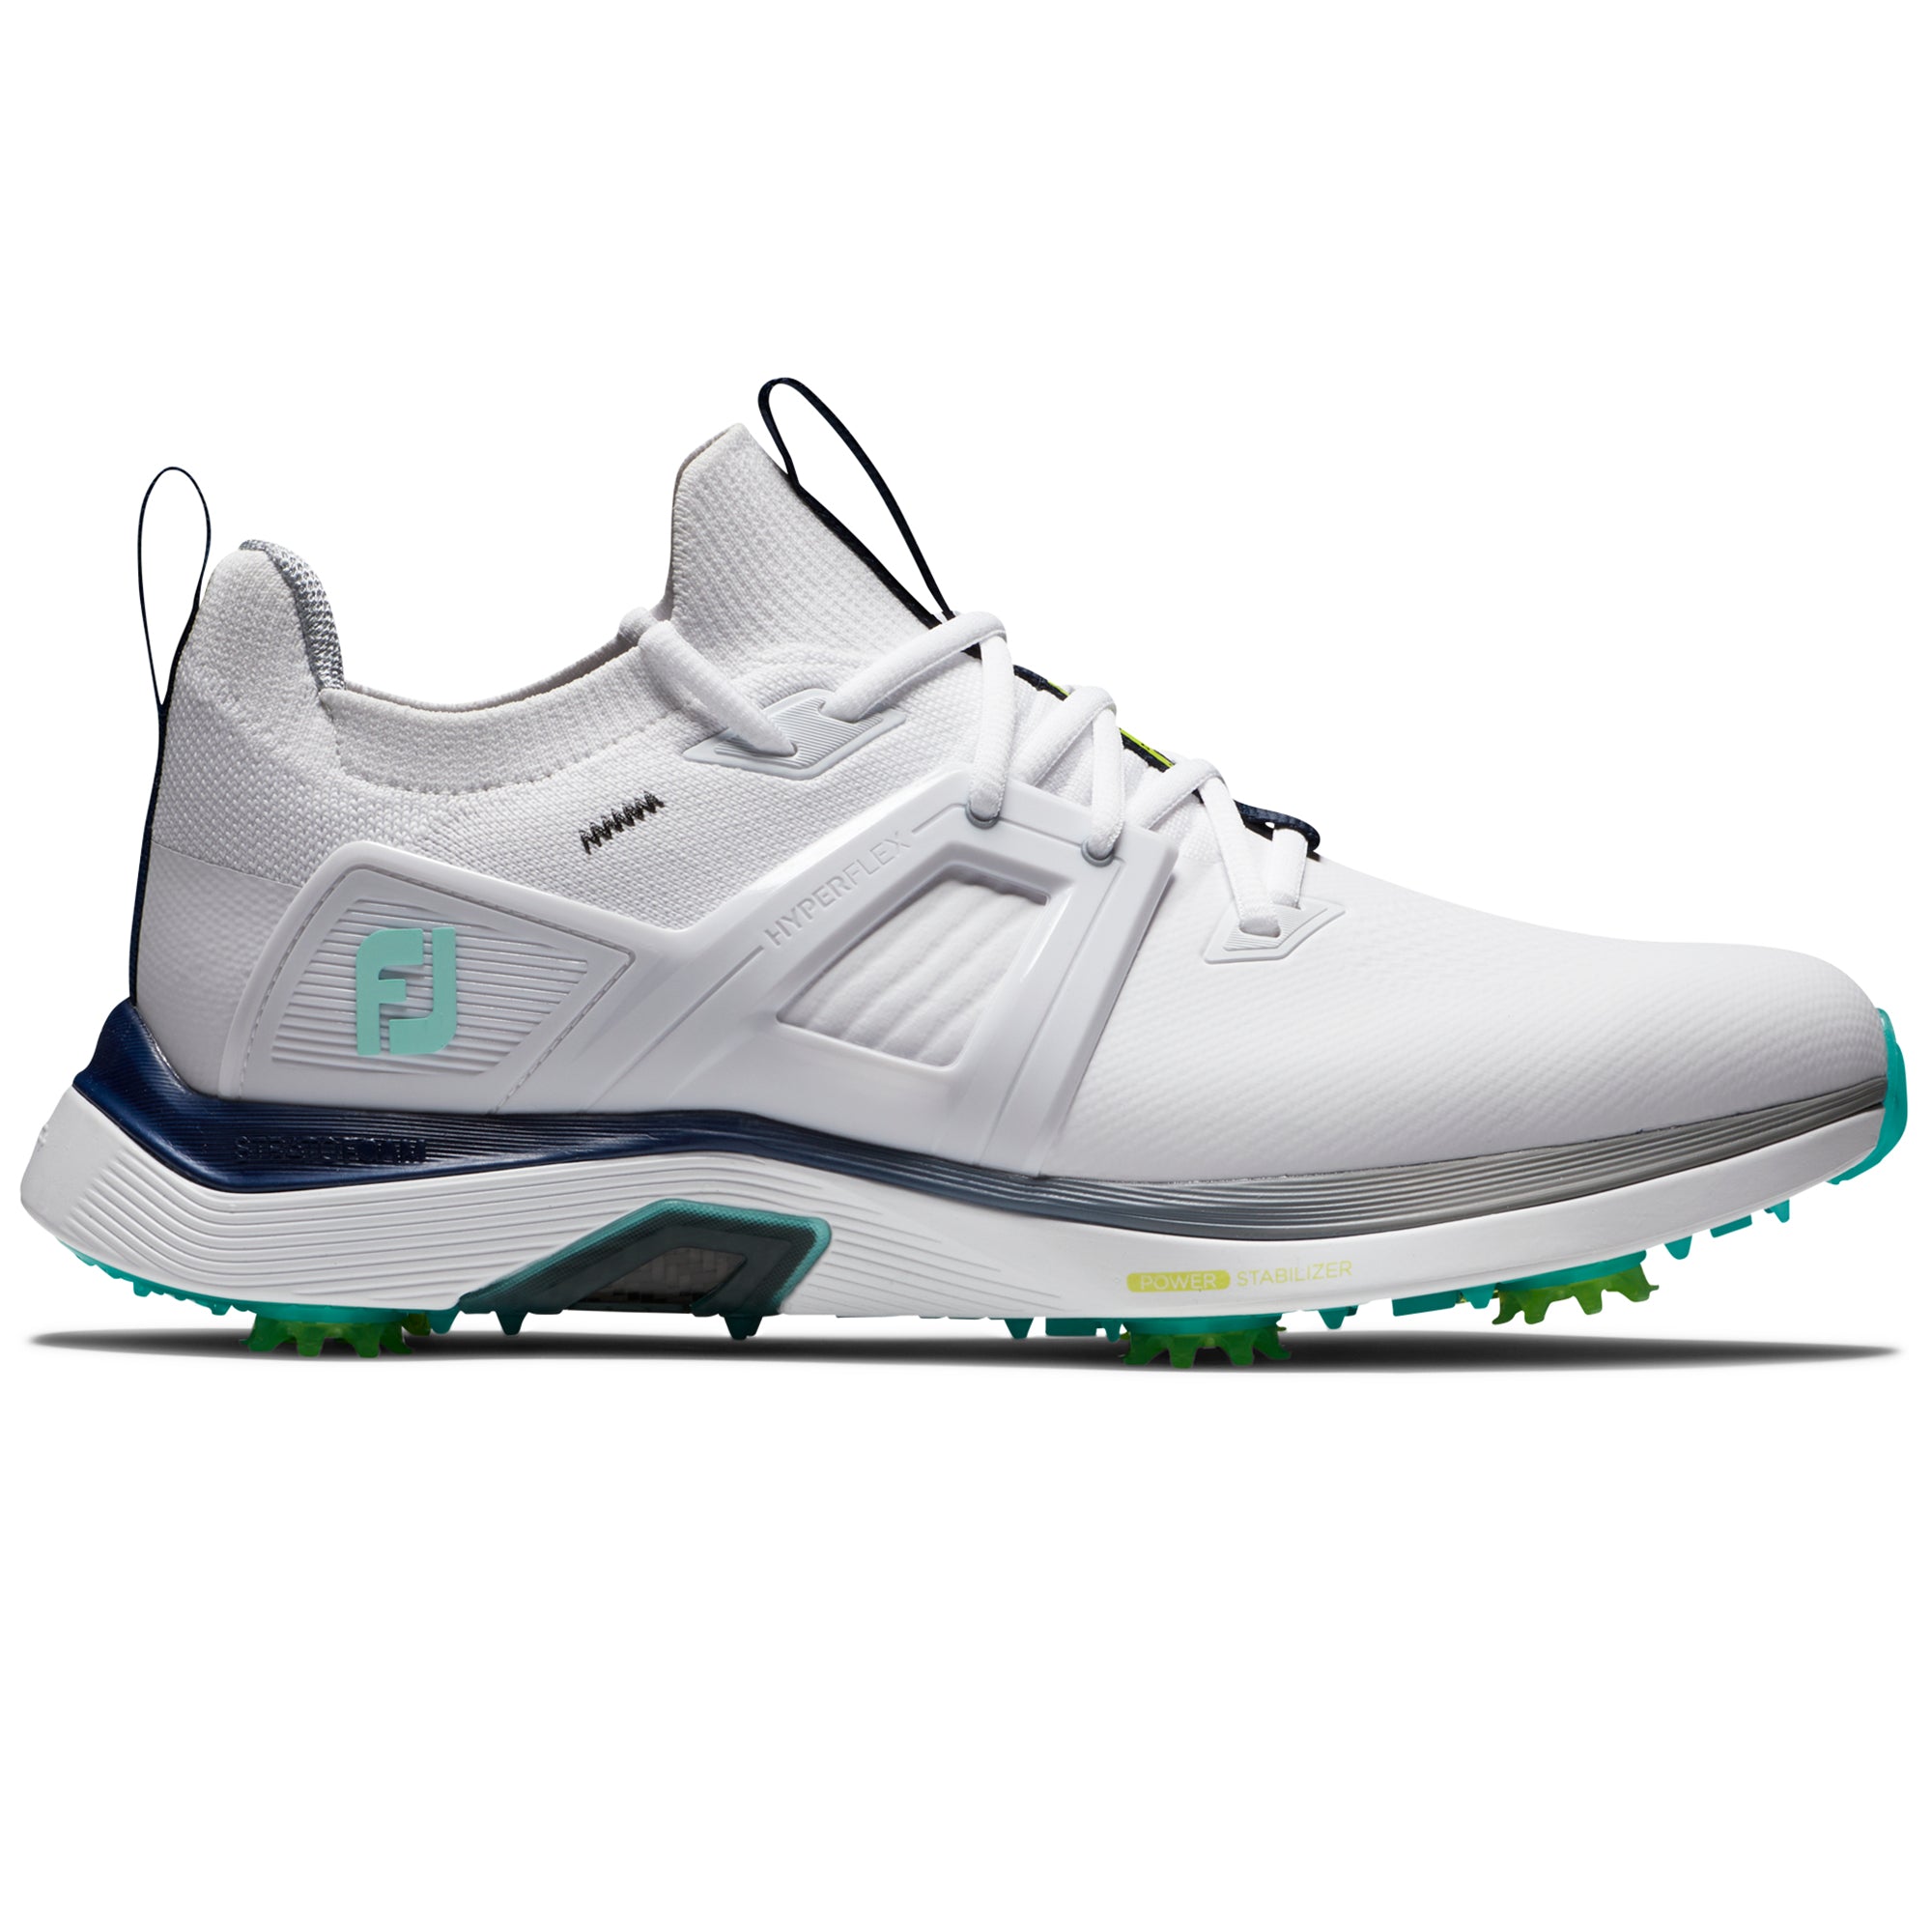 footjoy-hyperflex-carbon-golf-shoes-55461-white-charcoal-teal-55461